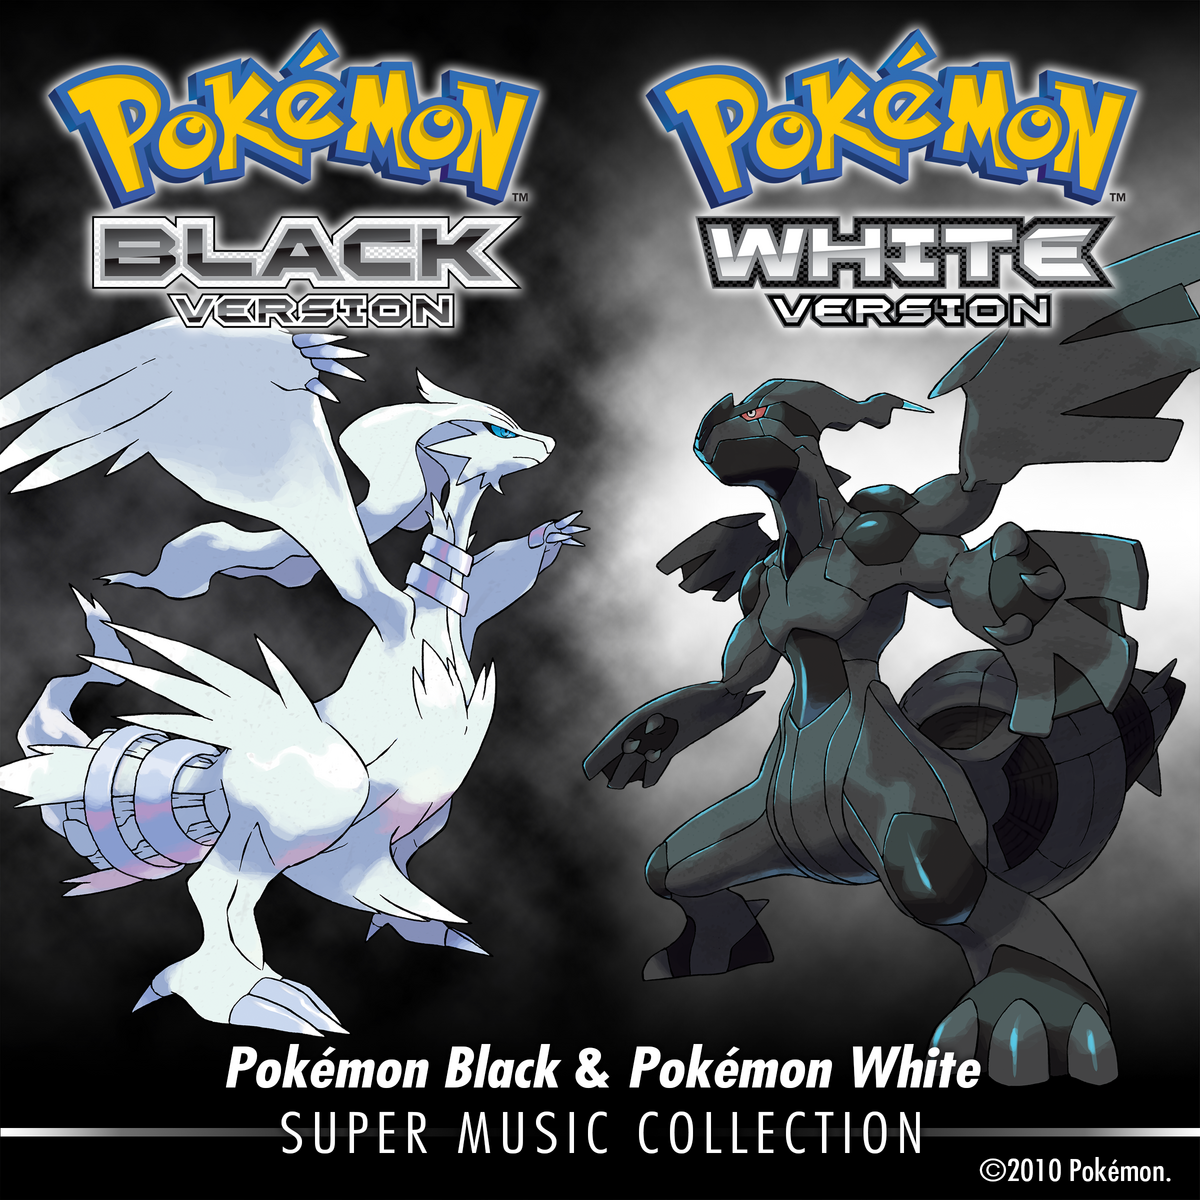 Pokémon Black & Pokémon White: Super Music Collection available on